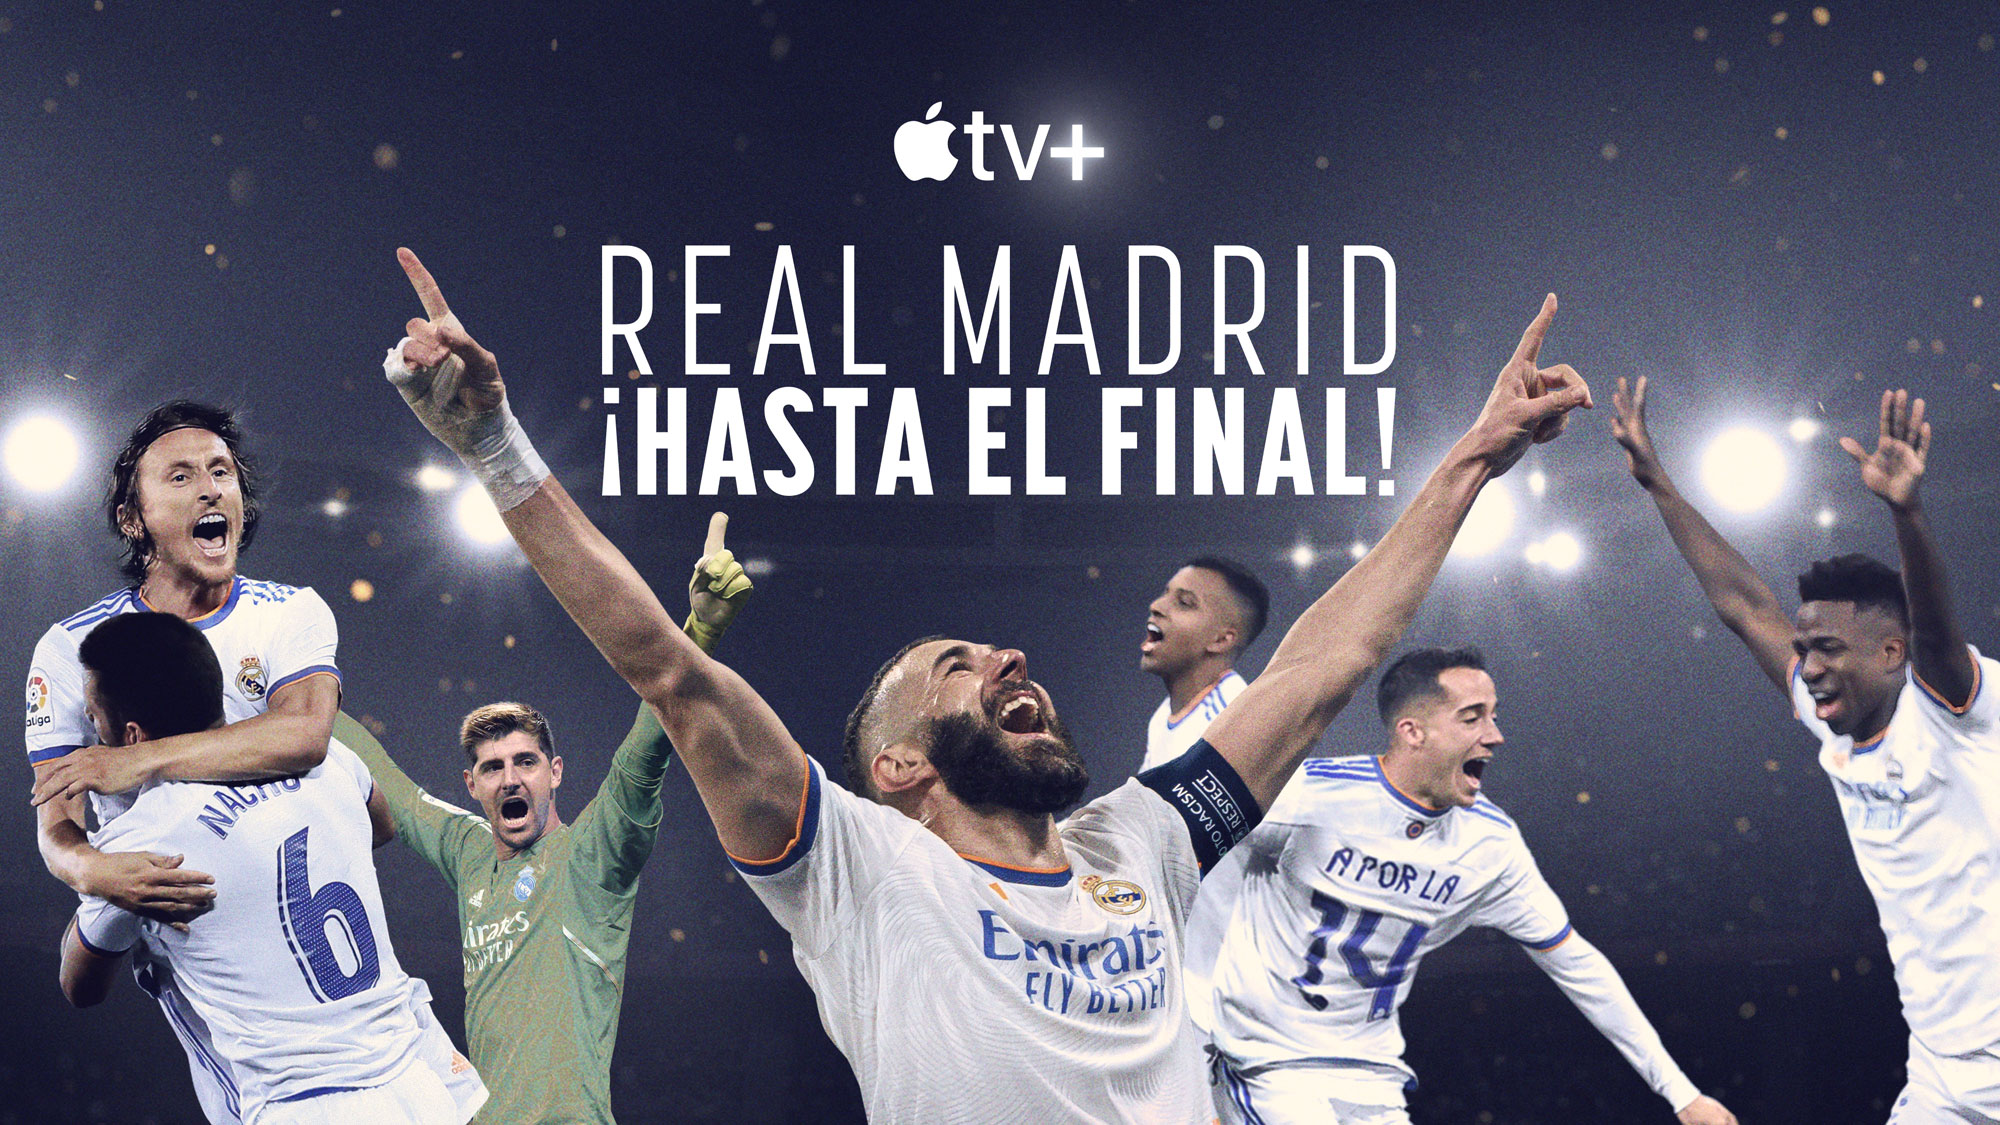 Real Madrid - ¡Hasta el final!, trailer della docuserie presentata da David Beckham su Apple TV Plus